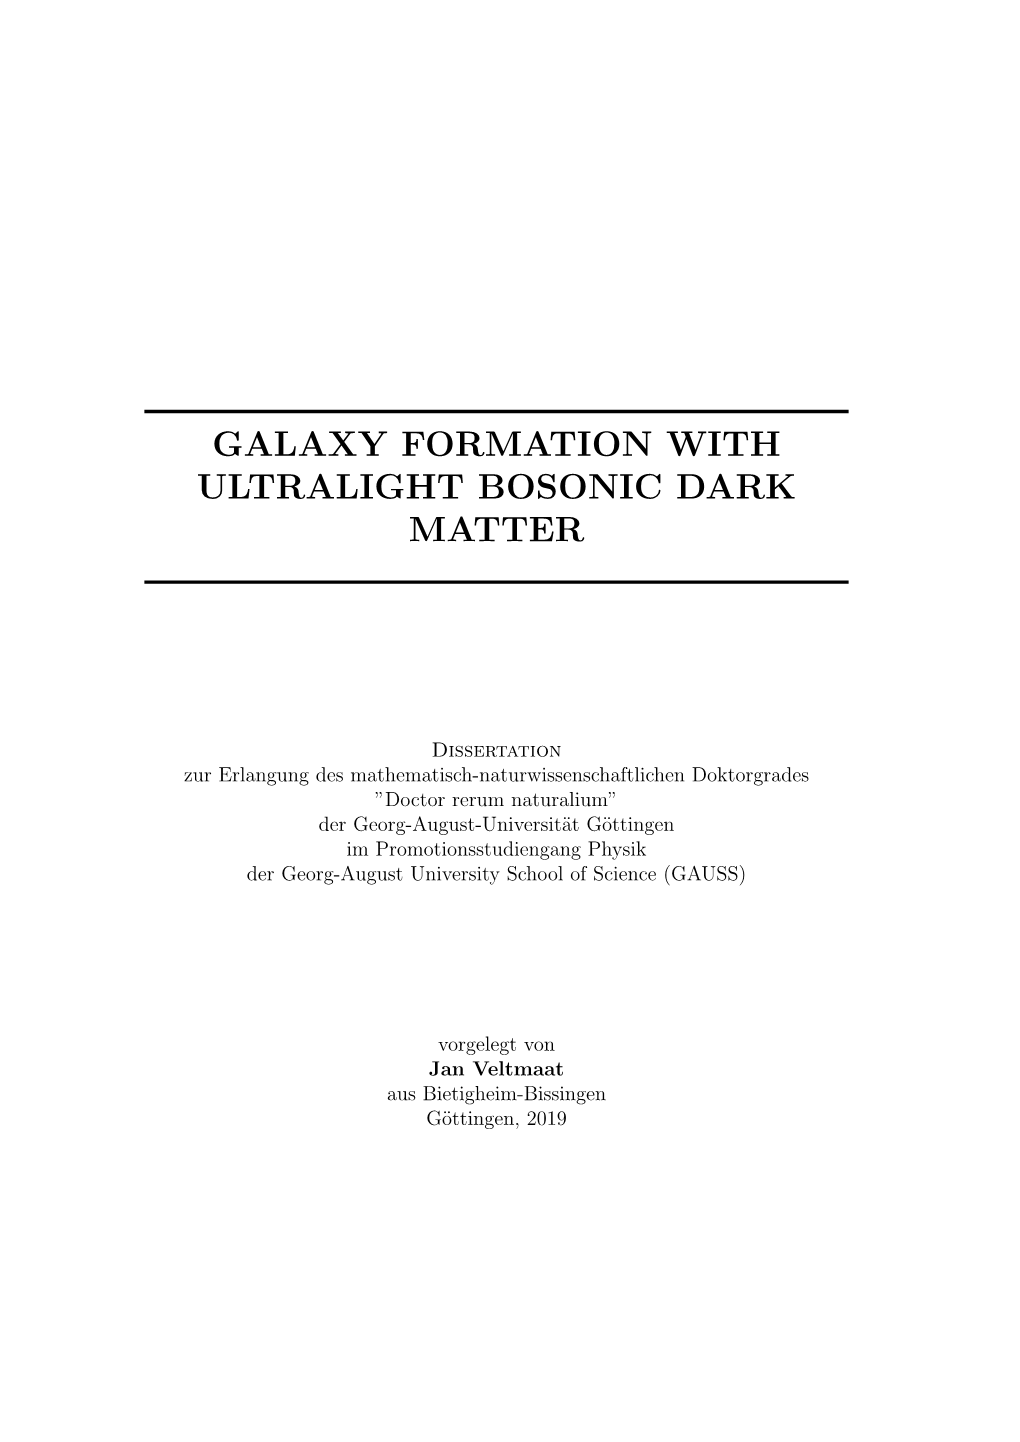 Galaxy Formation with Ultralight Bosonic Dark Matter